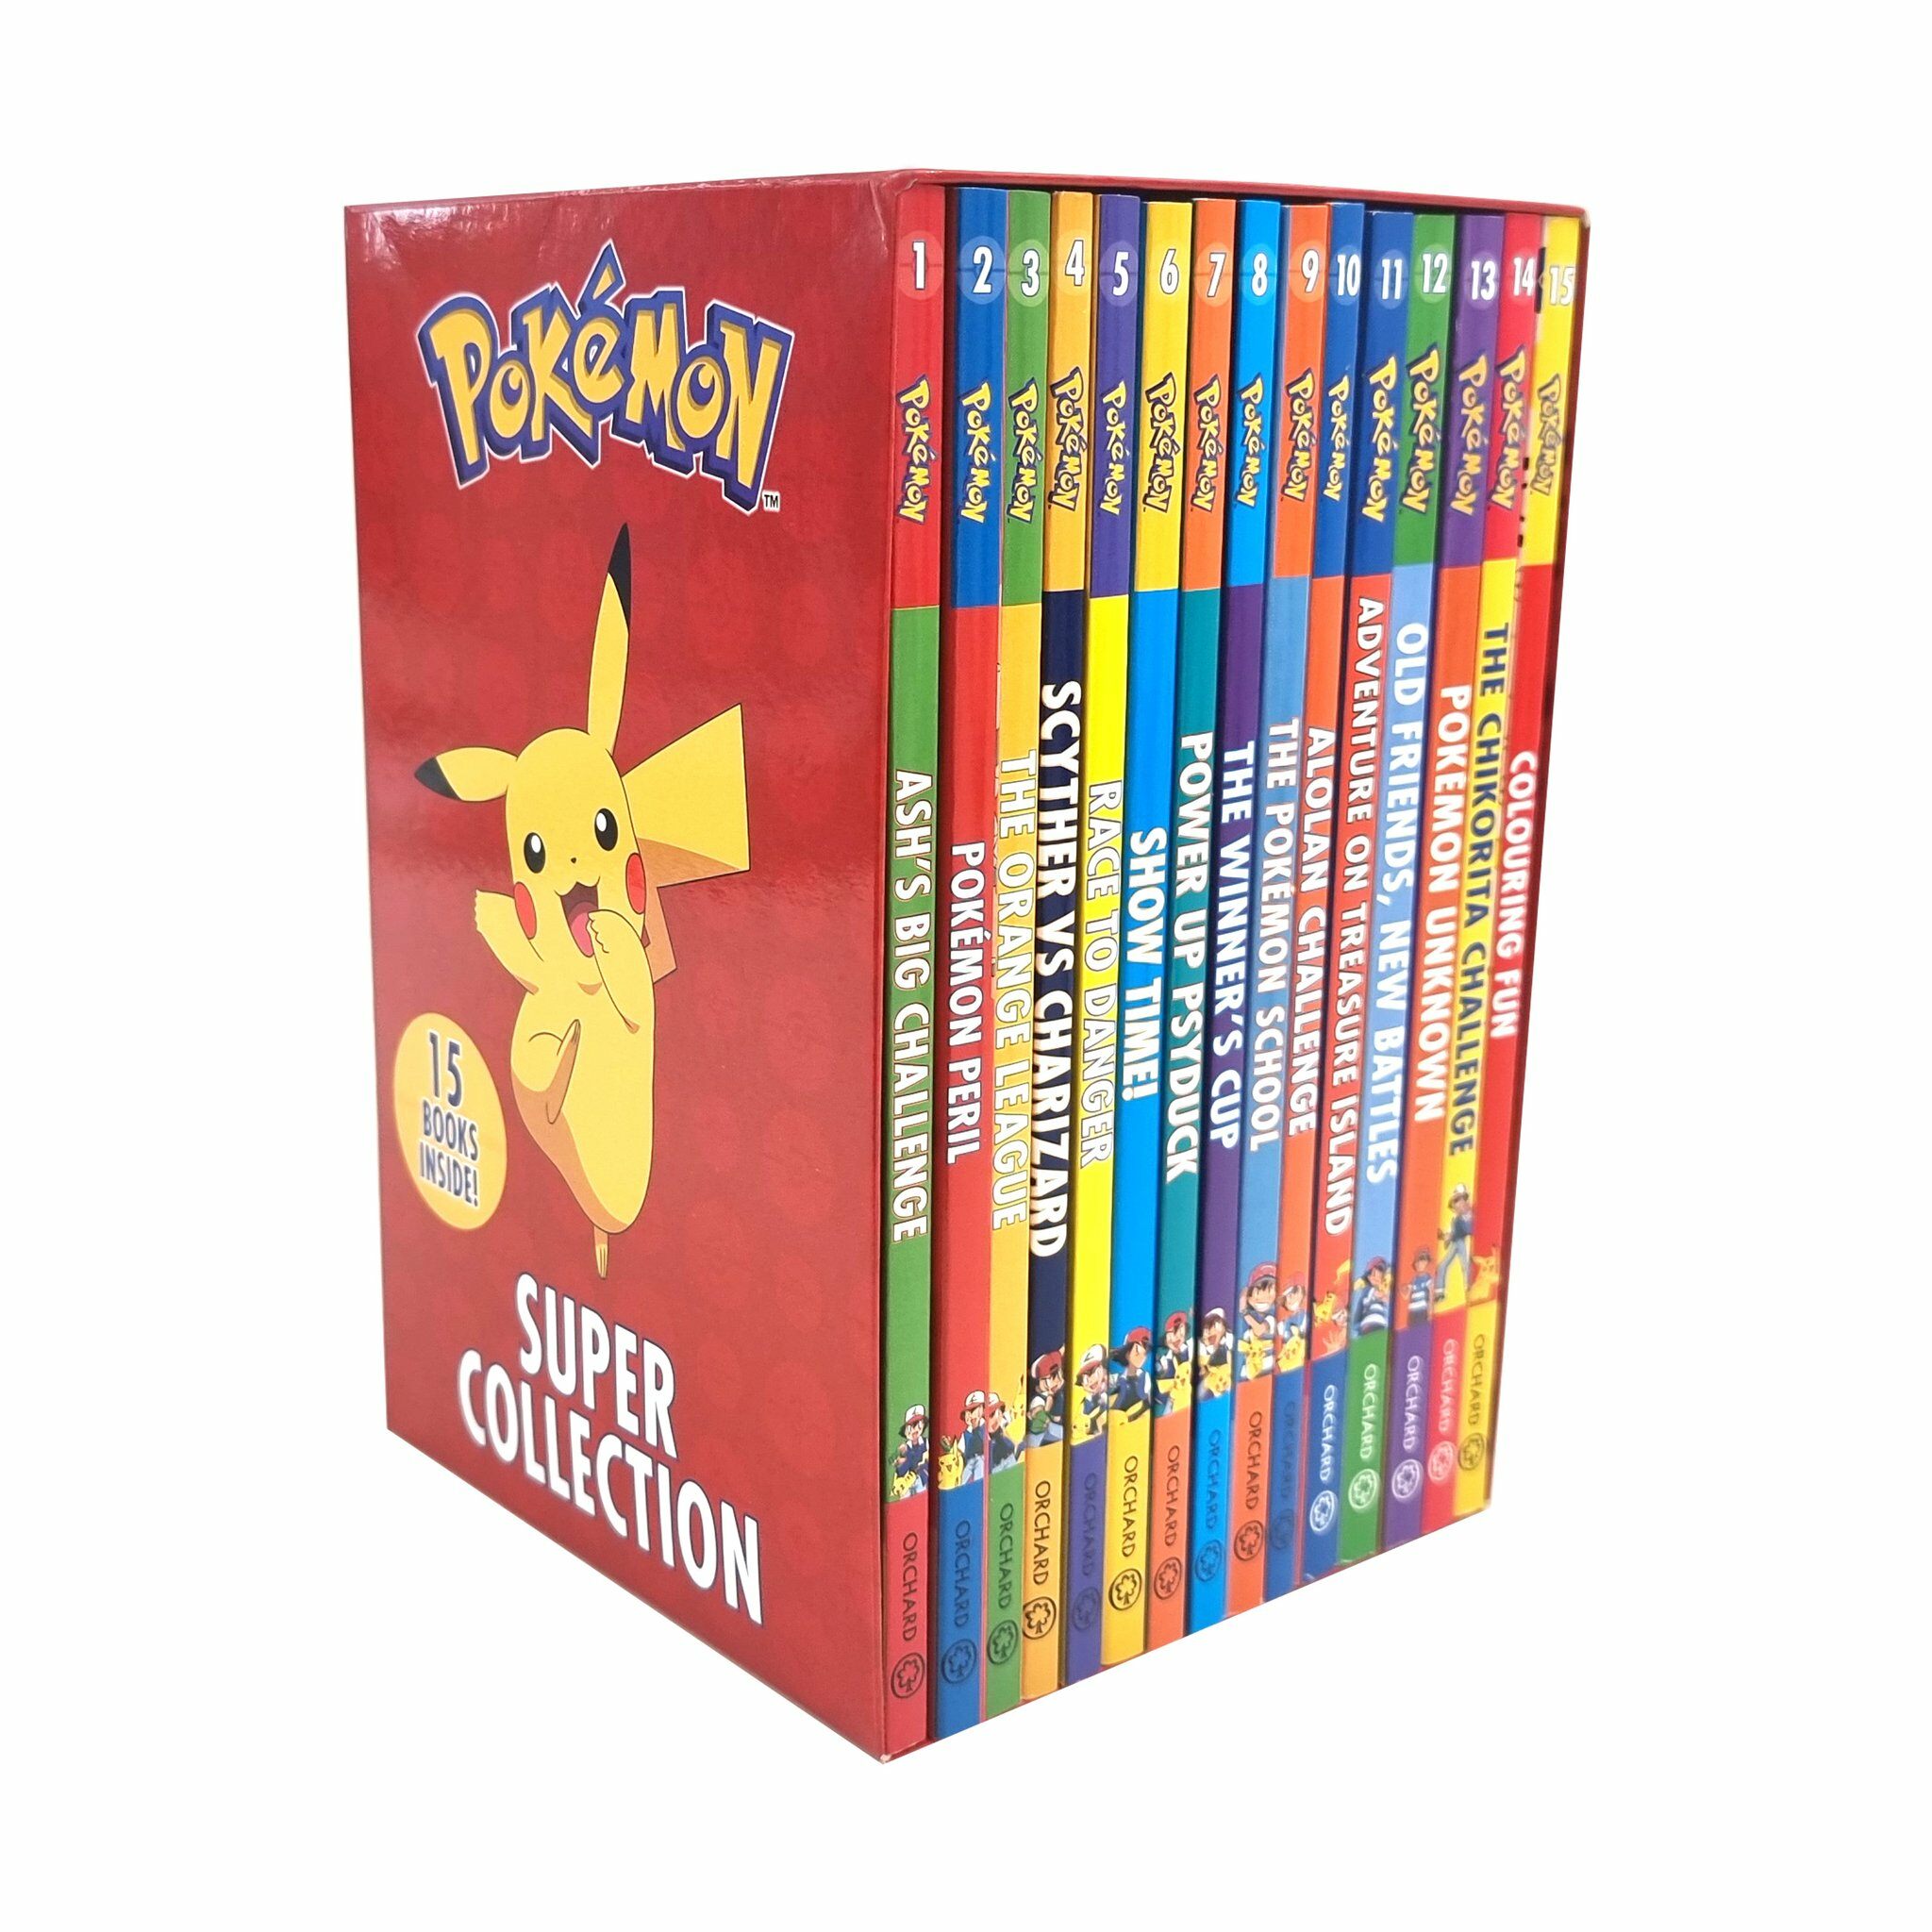 Pokemon Super Collection Series #1-15 Box Set (Paperback 15권)